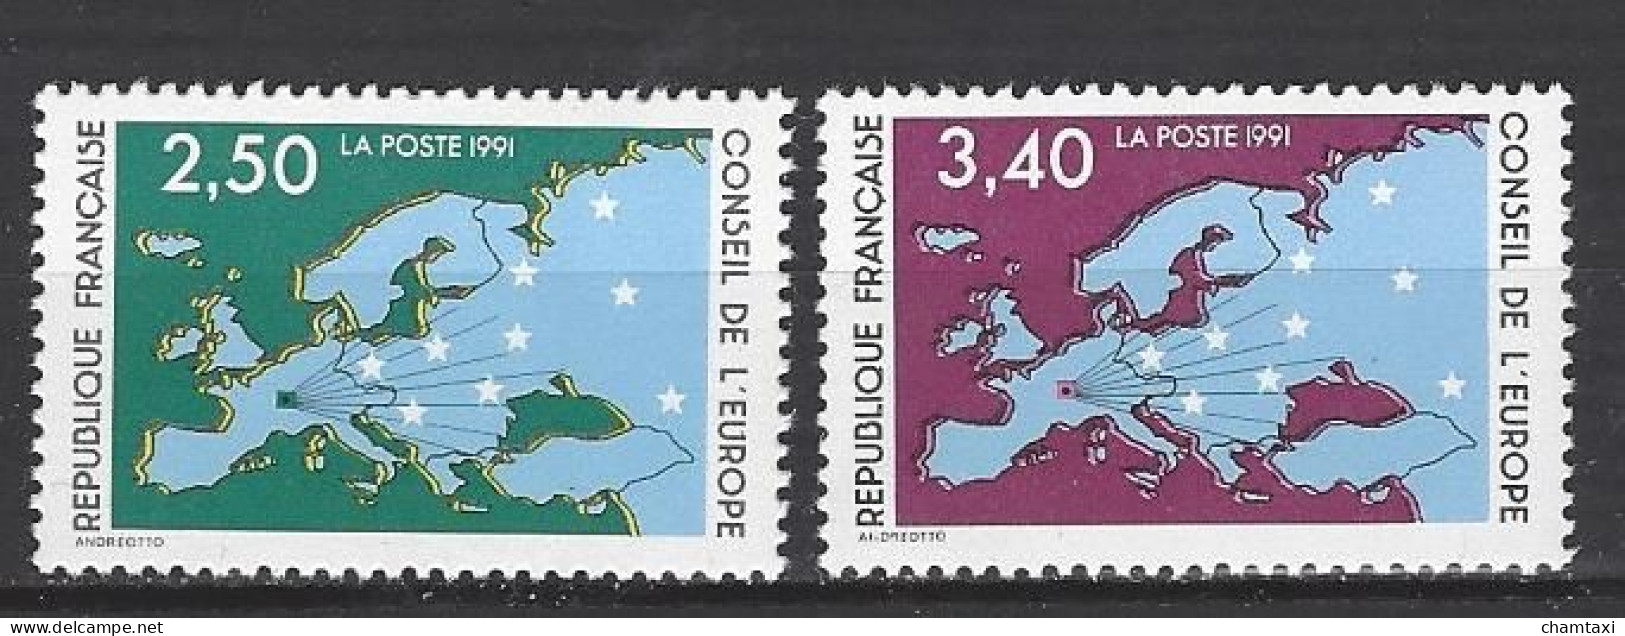 CONSEIL DE L EUROPE 1991 TIMBRE SERVICE 106 107 CARTE D EUROPE ET ETOILES - Nuovi